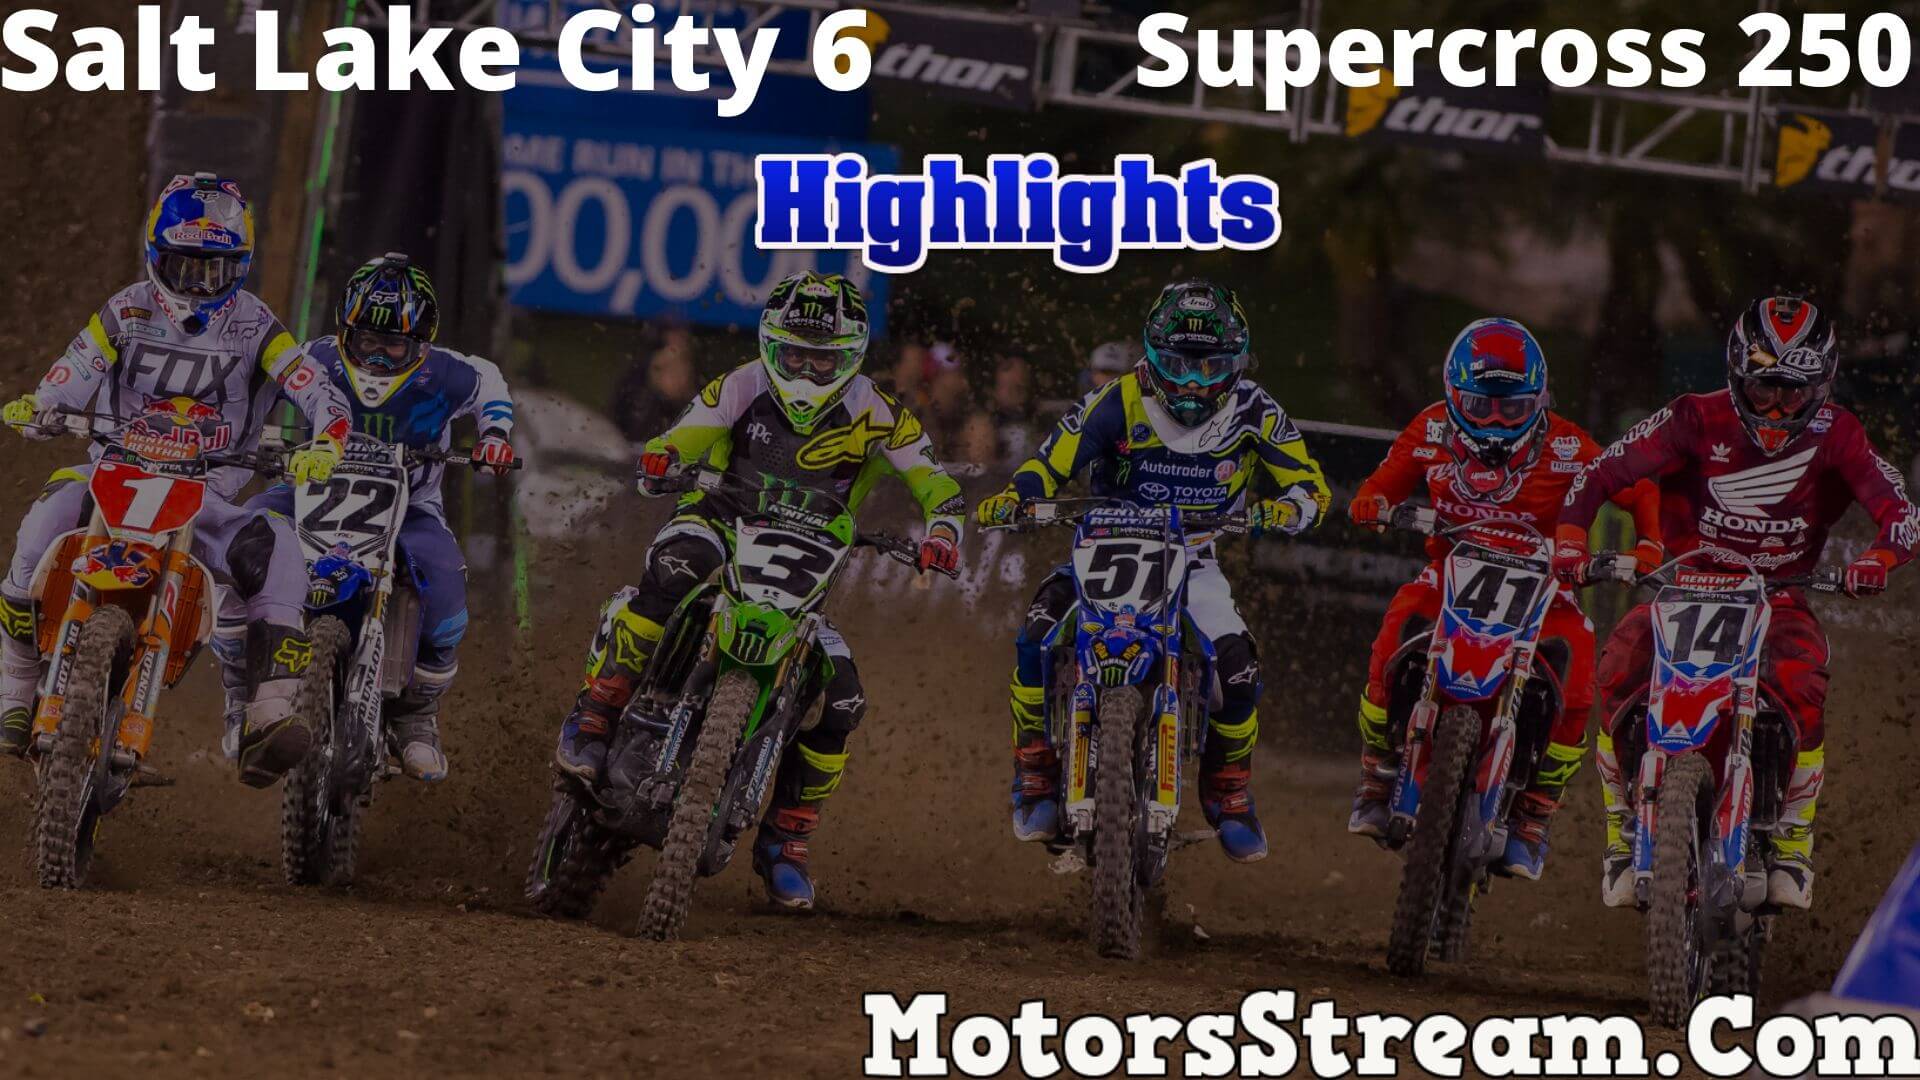 Super Lake City 6 Highlights 2020 Supercross 250